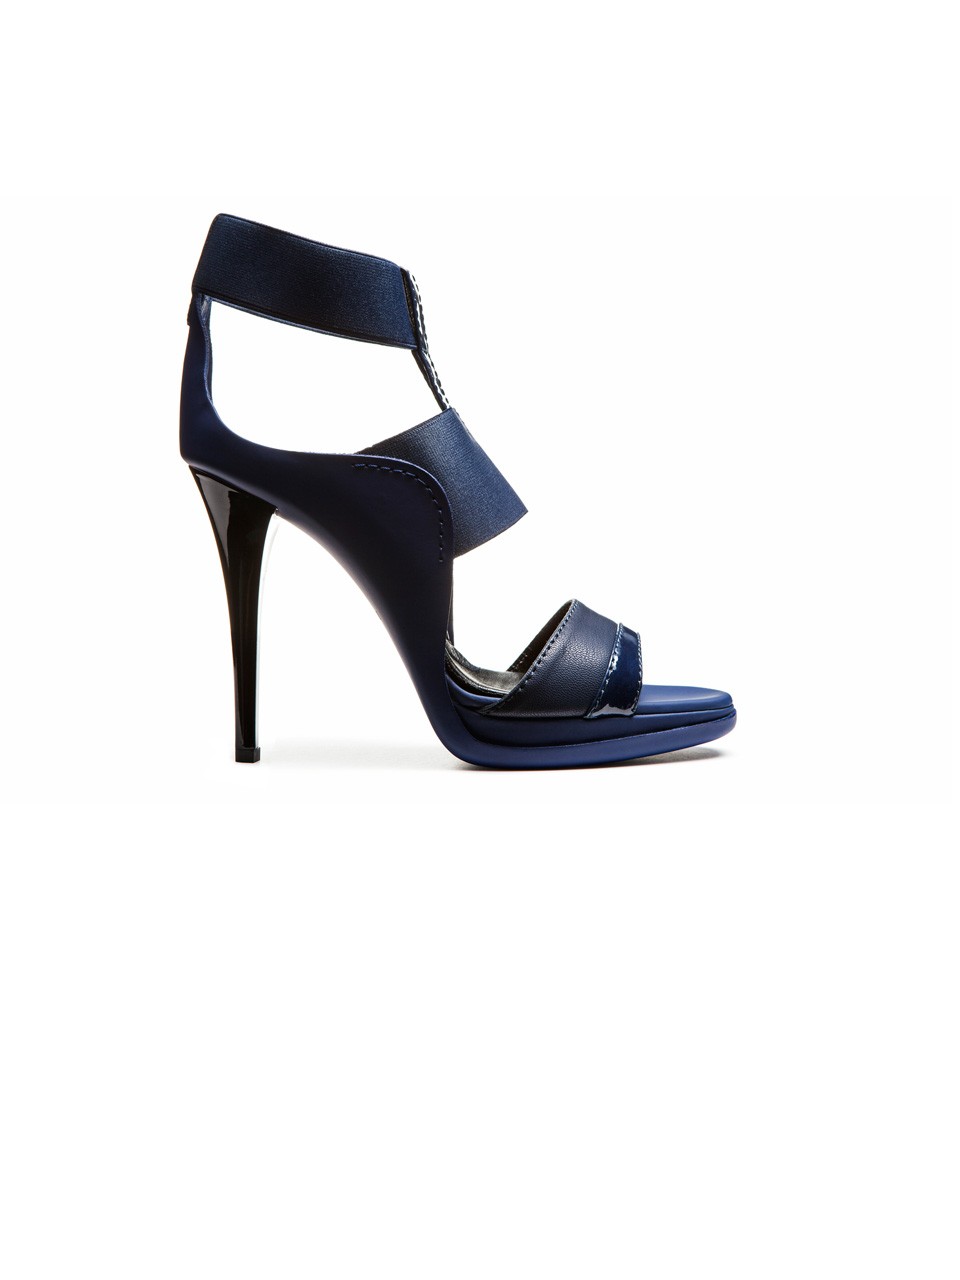 ... Life | Cars Fashion Lifestyle Blog: Pirelli PZero High-Heeled Sandals